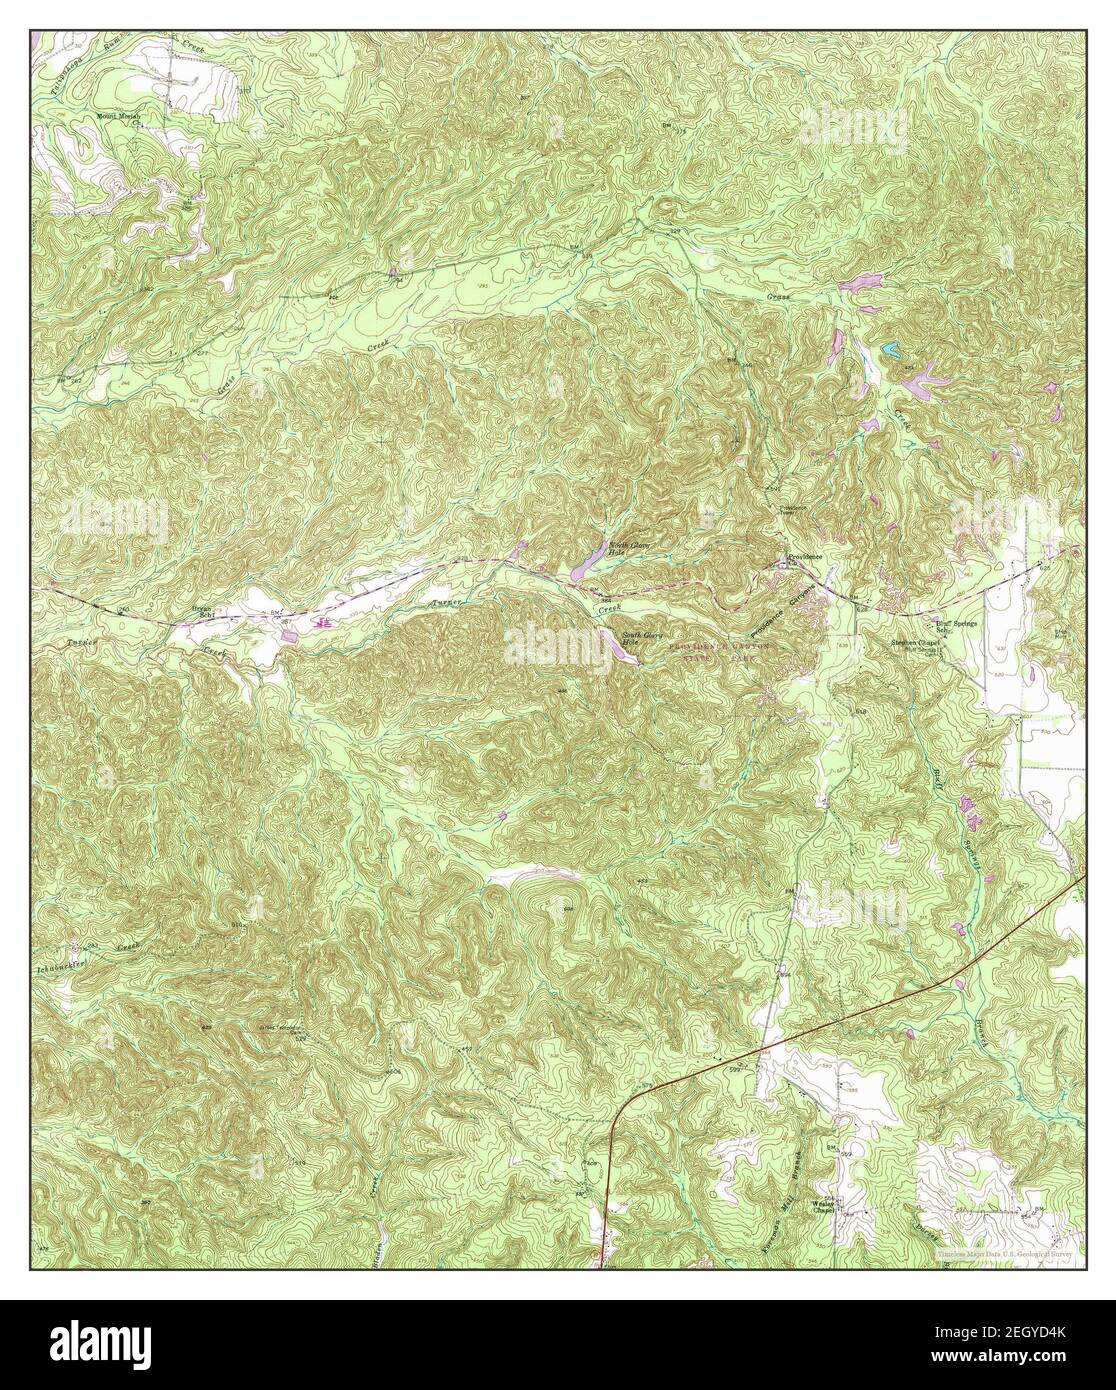 Lumpkin SW, Georgia, map 1955, 1:24000, United States of America by Timeless Maps, data U.S. Geological Survey Stock Photo